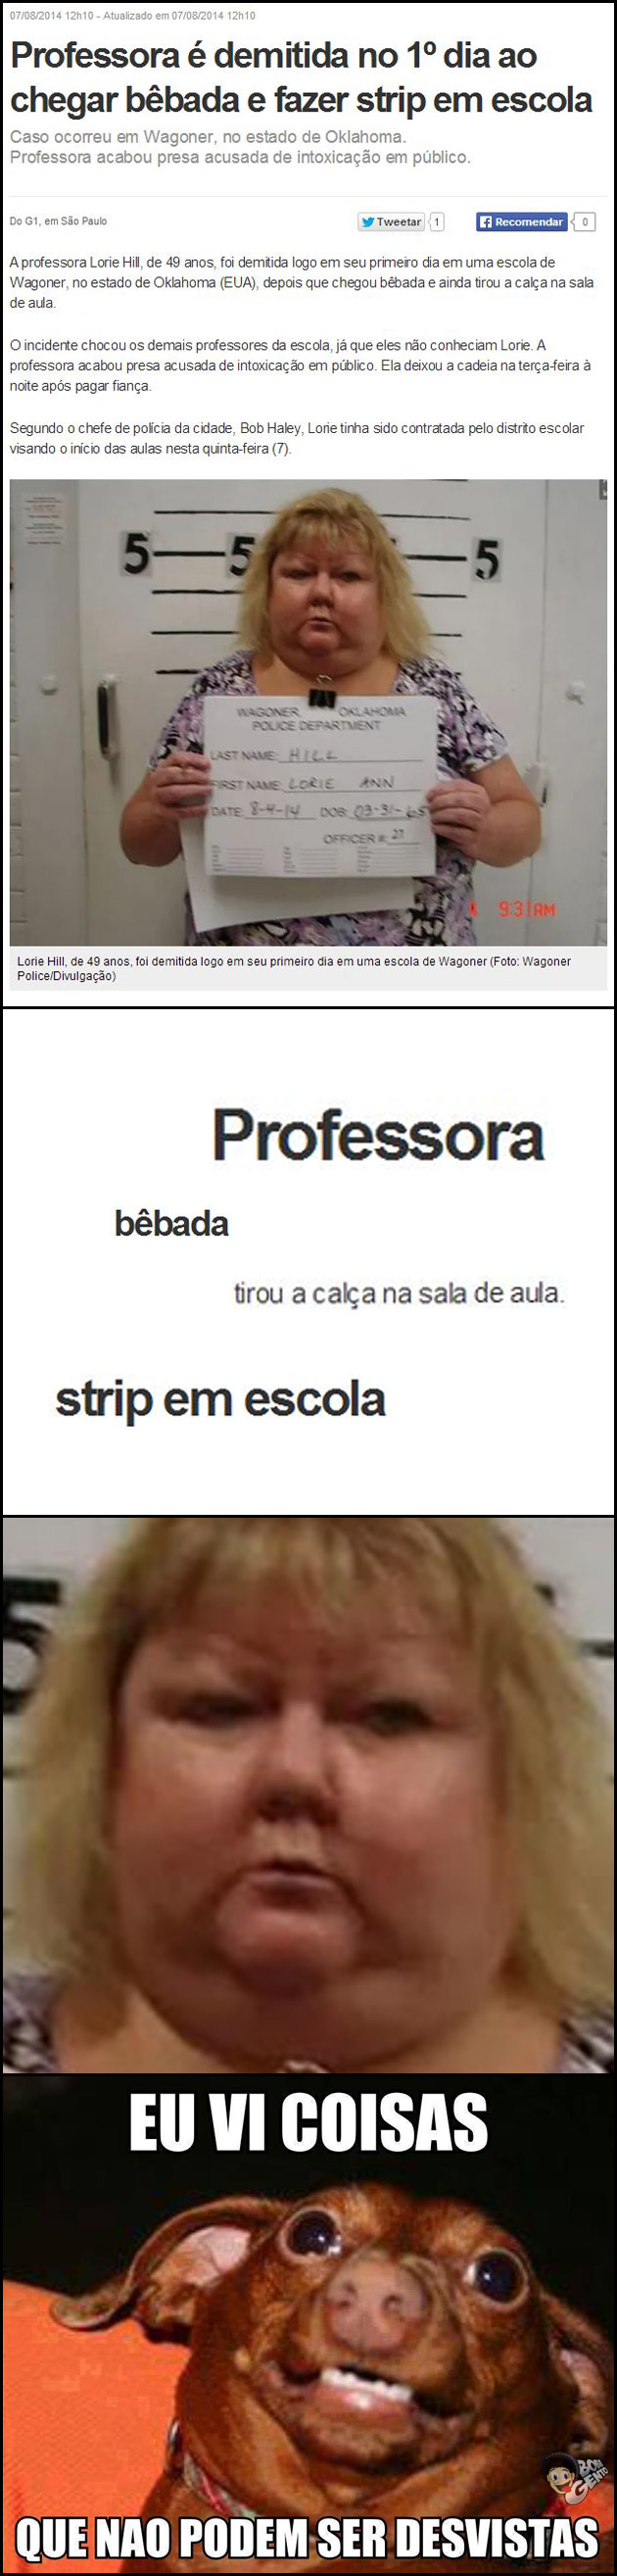 PROFESSORA BEBADA